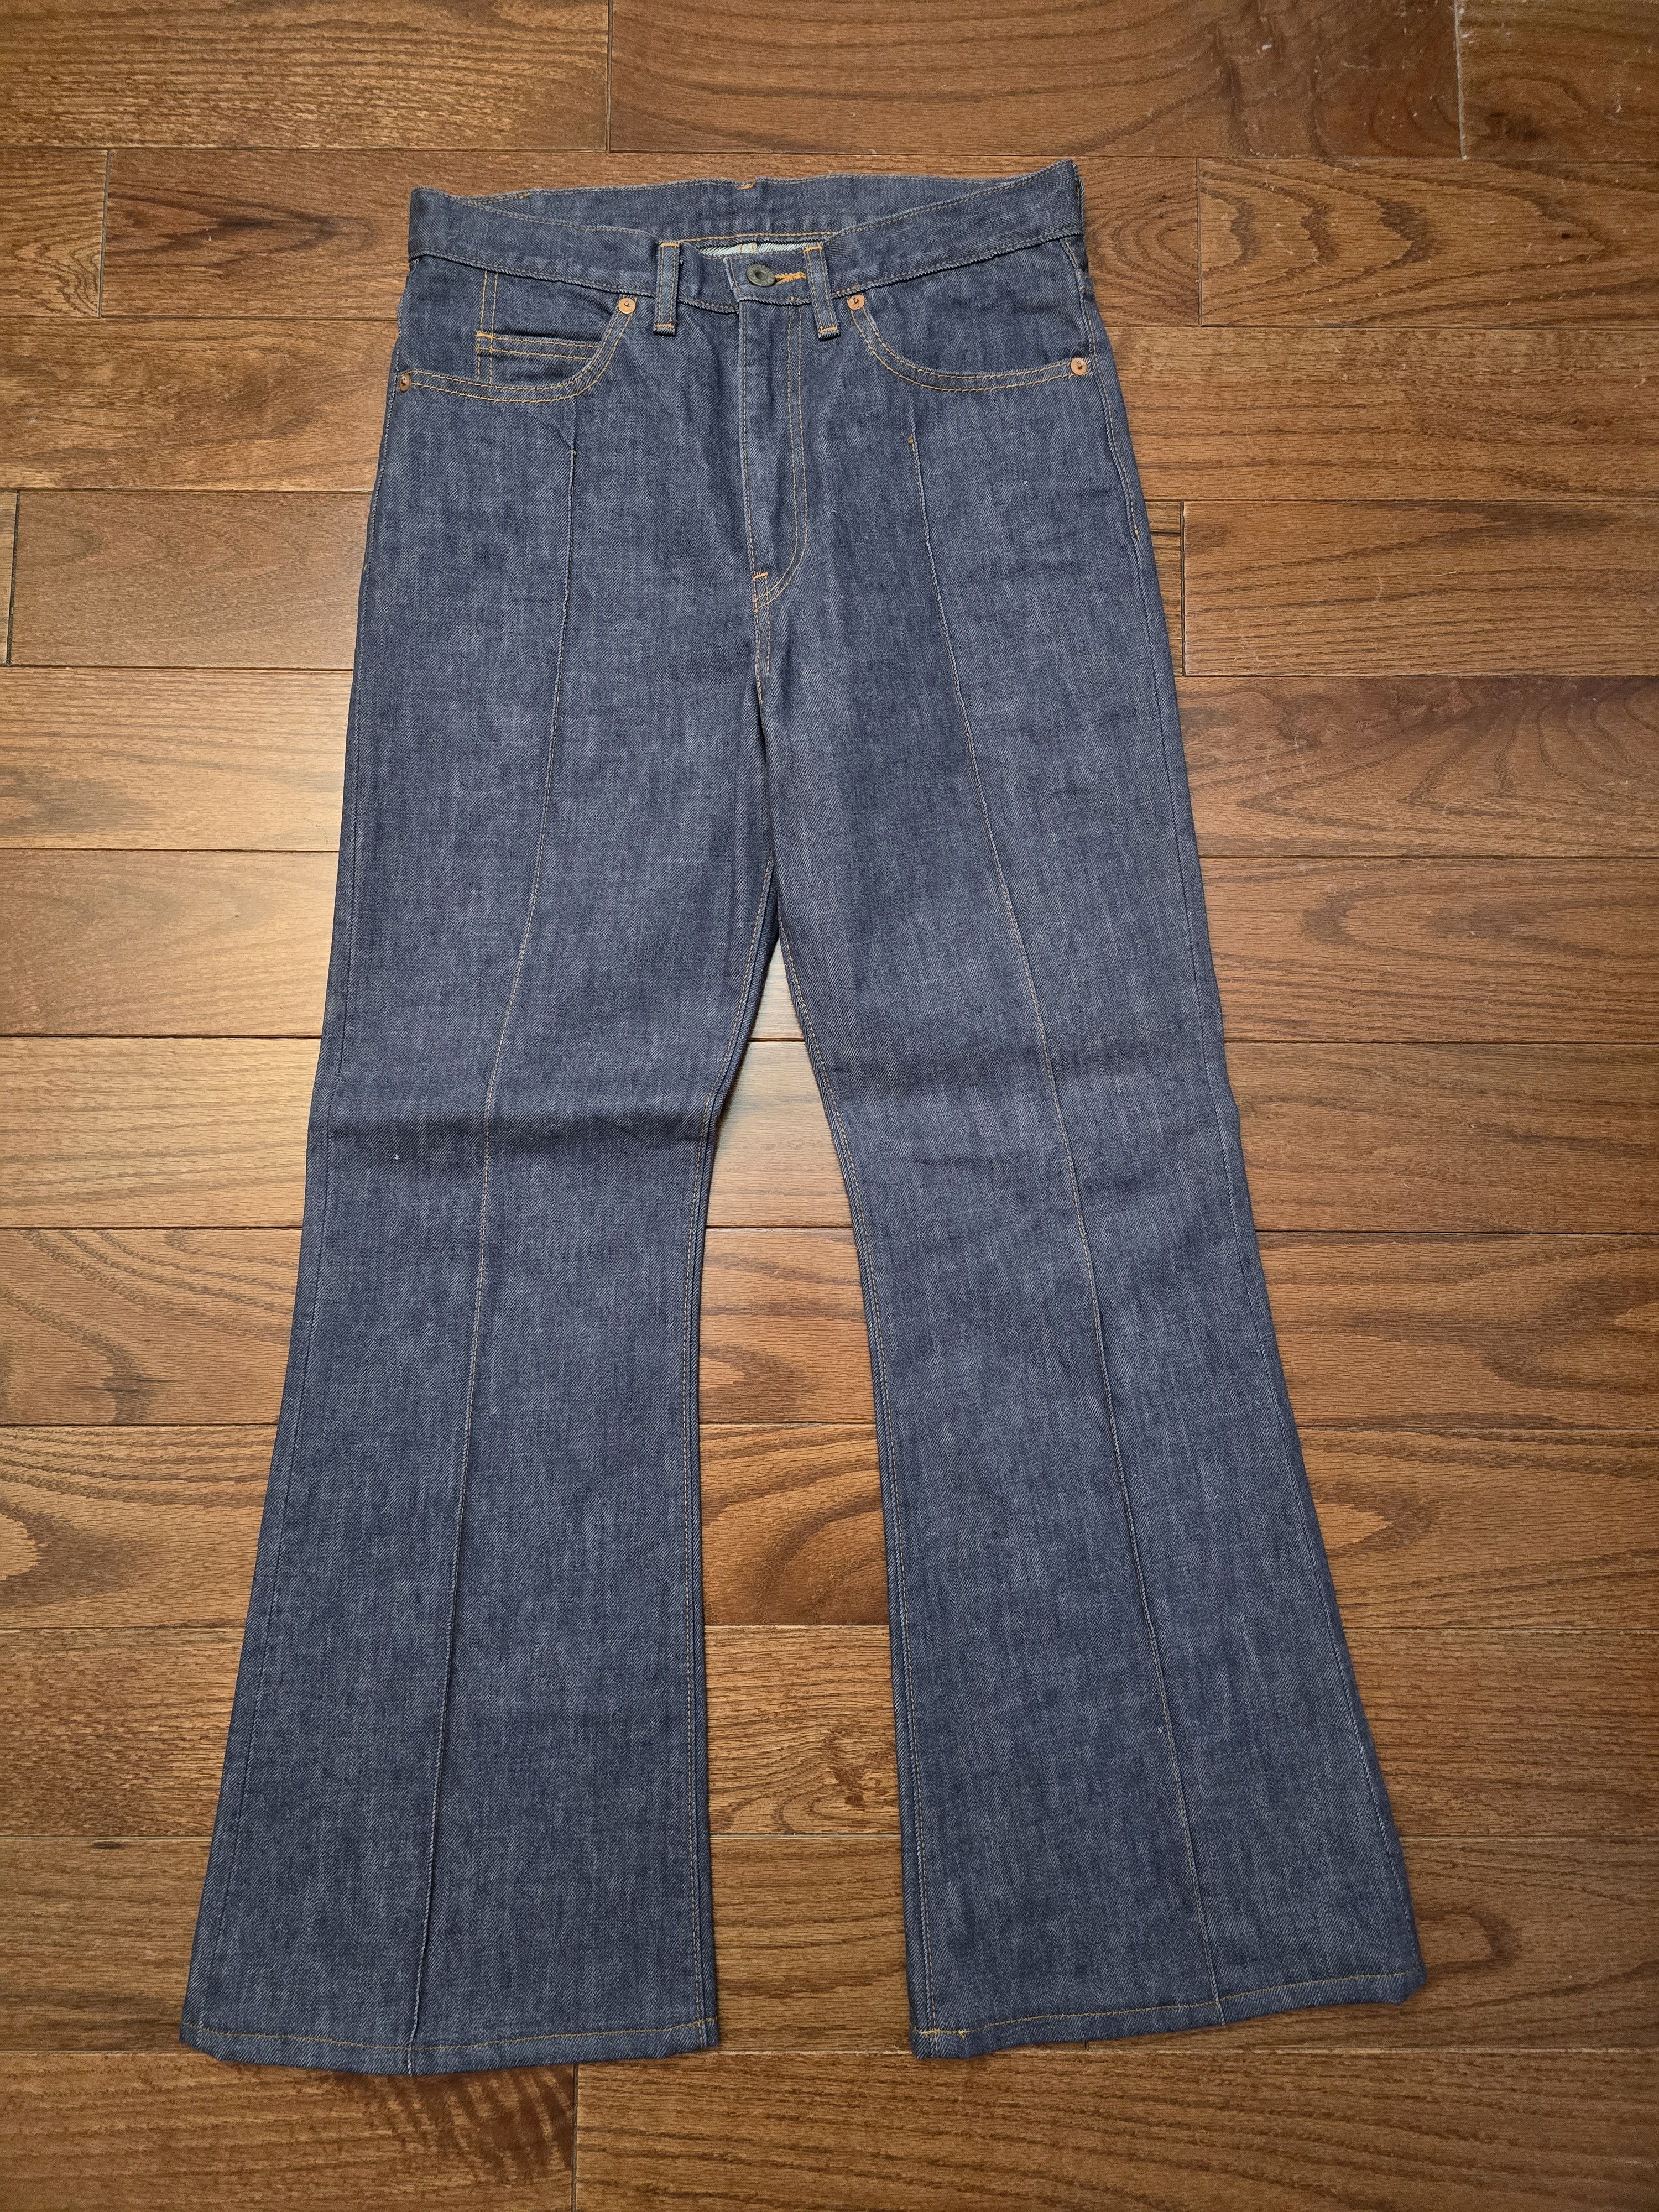 Kapital Kapital Indigo Dyed Flare Jeans Size US 32 / EU 48 - 1 Preview